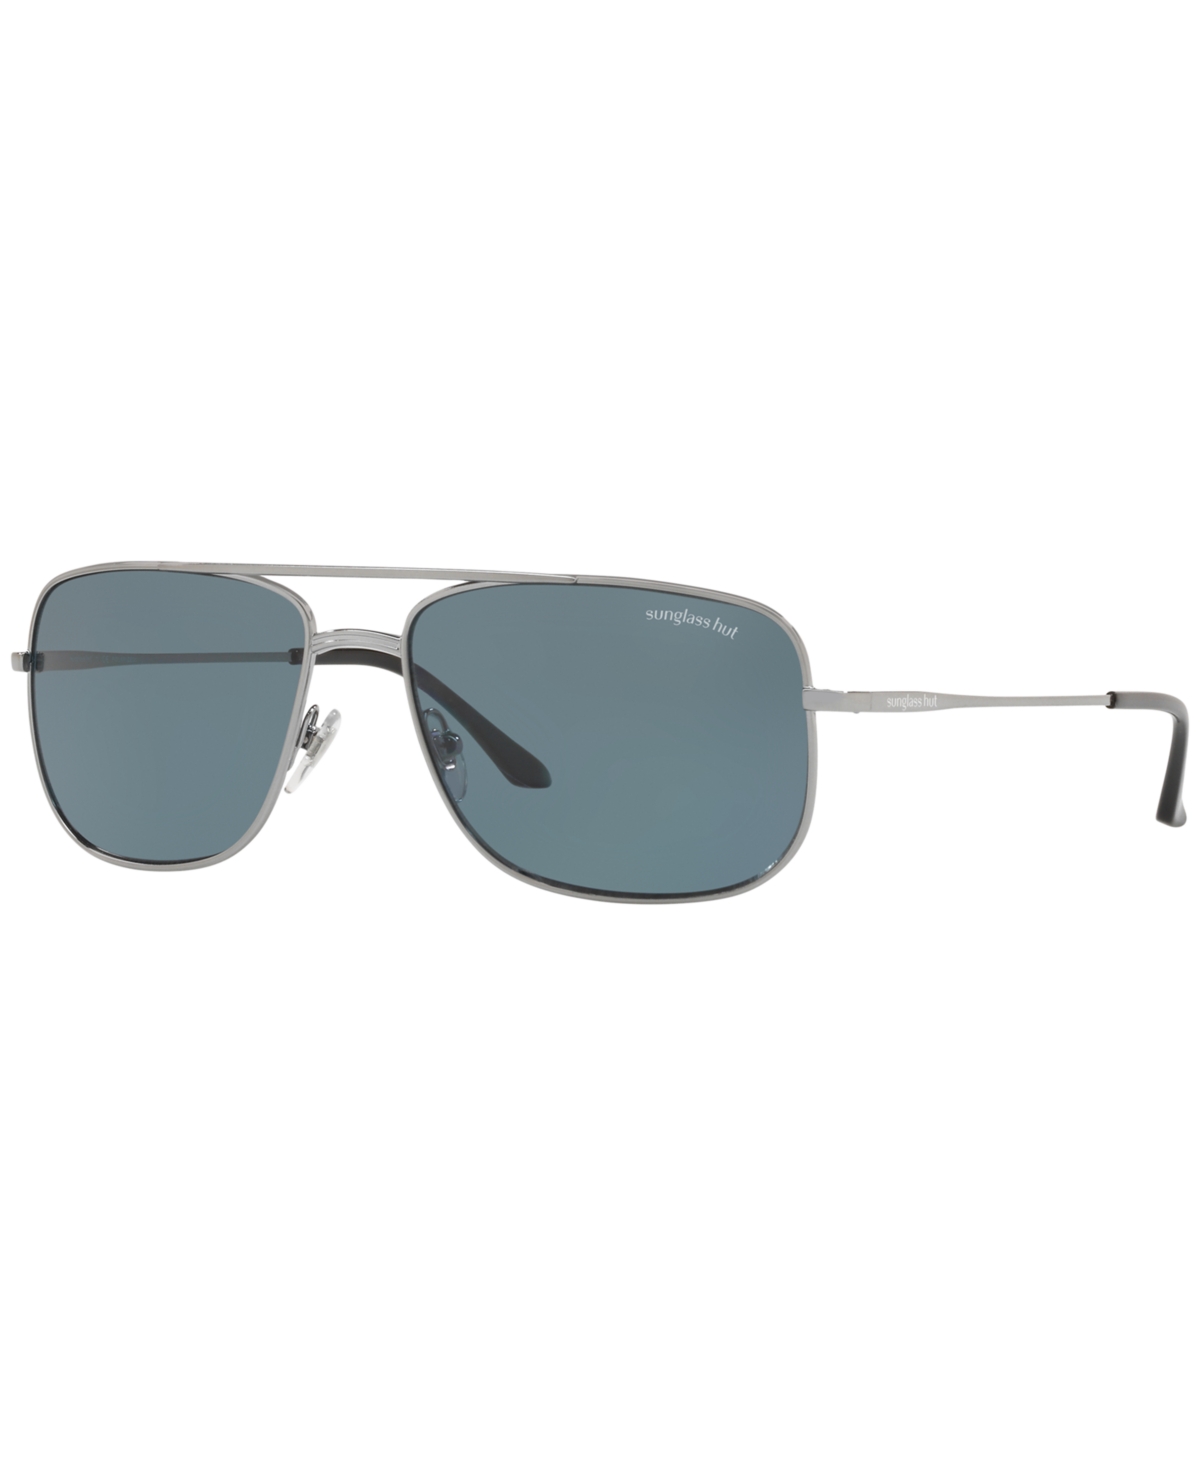 Sunglasses, HU1004 - GREY/BLUE POLAR